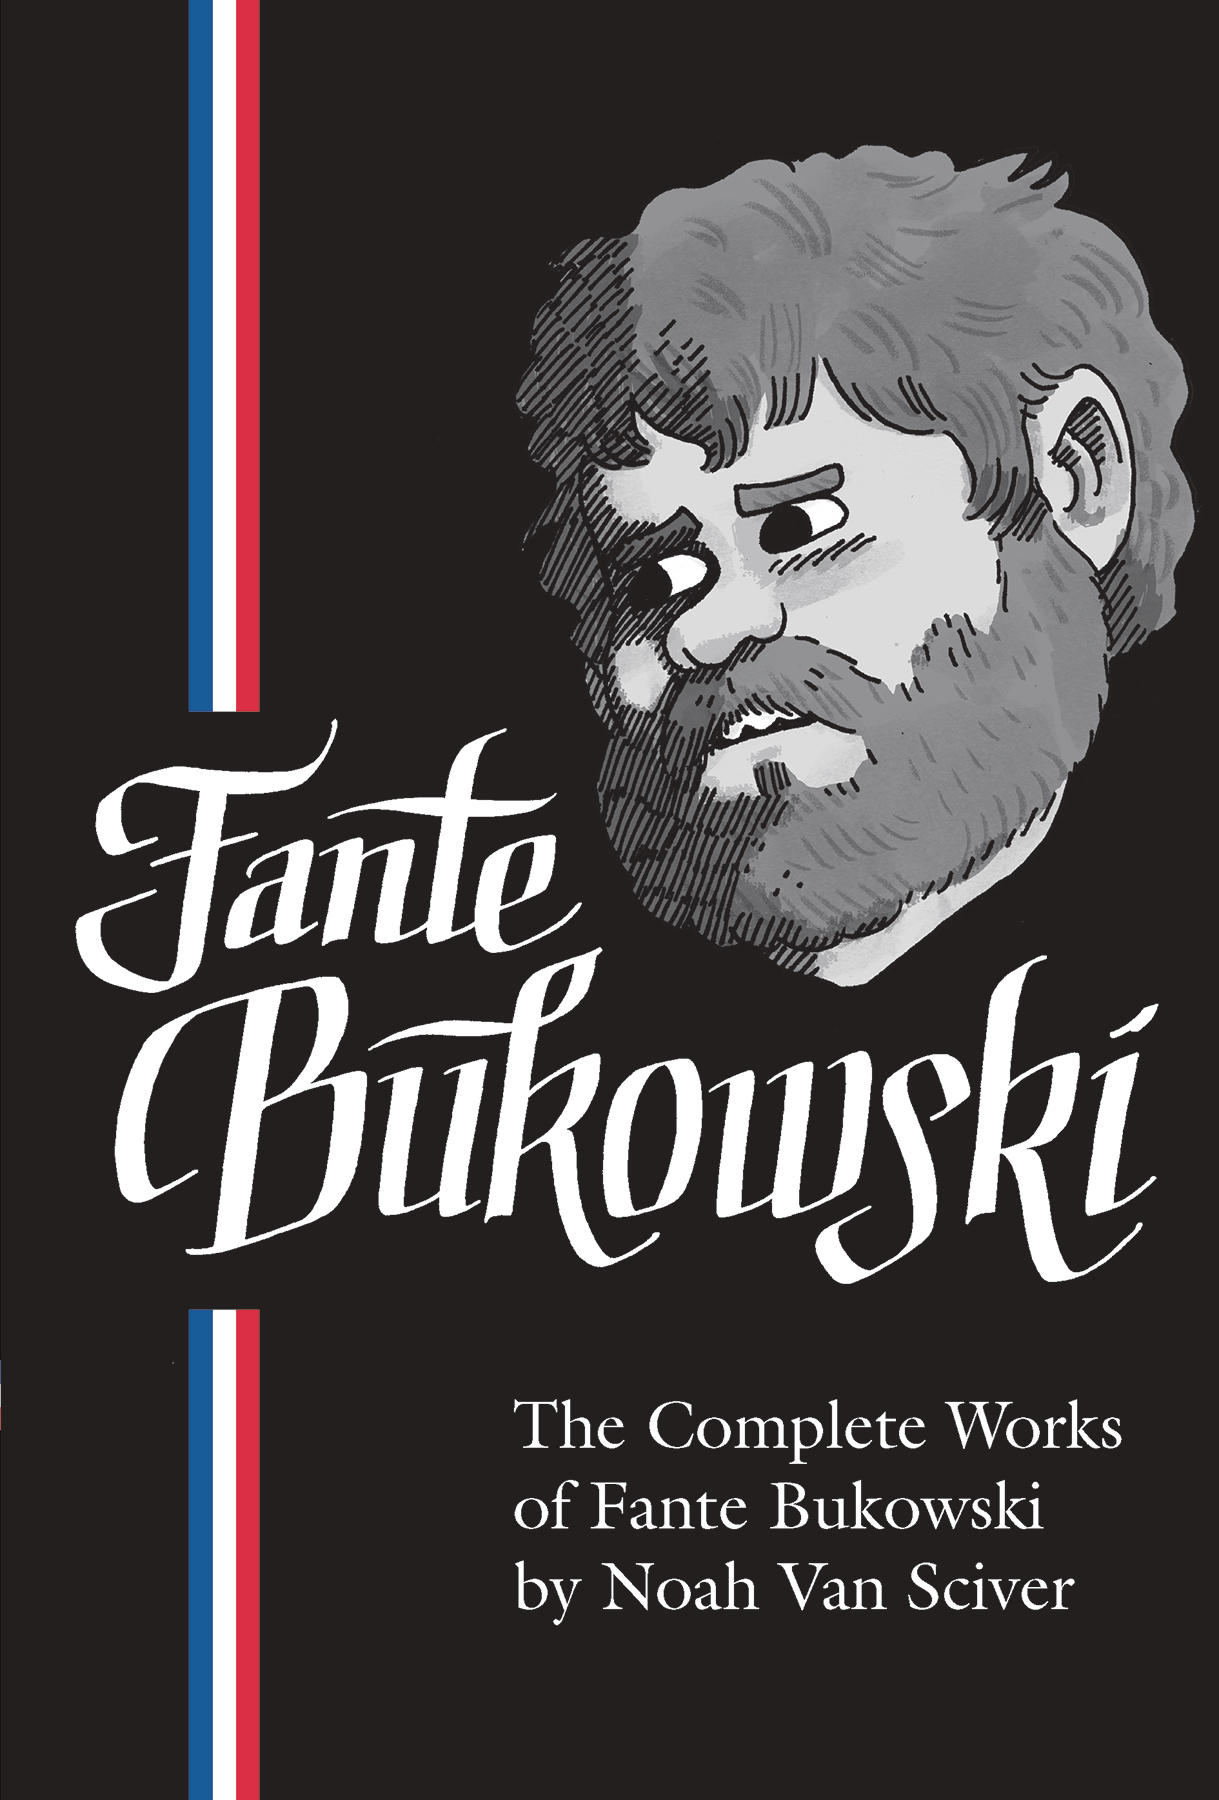 Complete Works of Fante Bukowski Hardcover